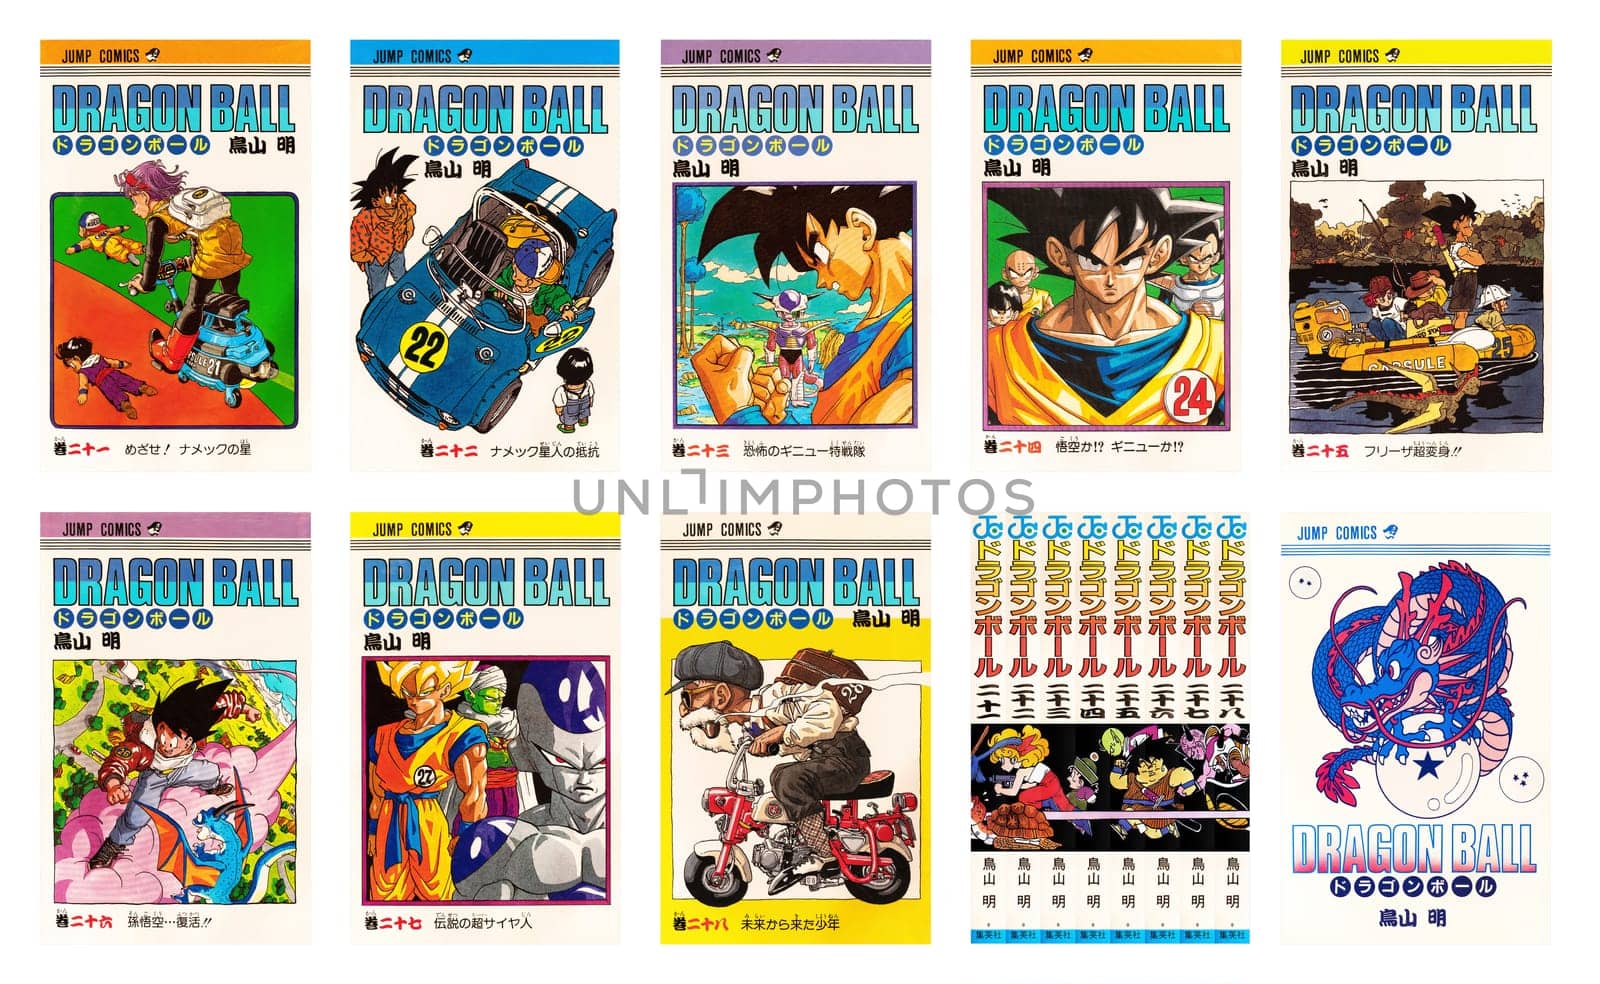 (set 5/7) Covers 21 to 28 of the Japanese manga Dragon Ball featuring the Frieza saga on planet Namek. by kuremo